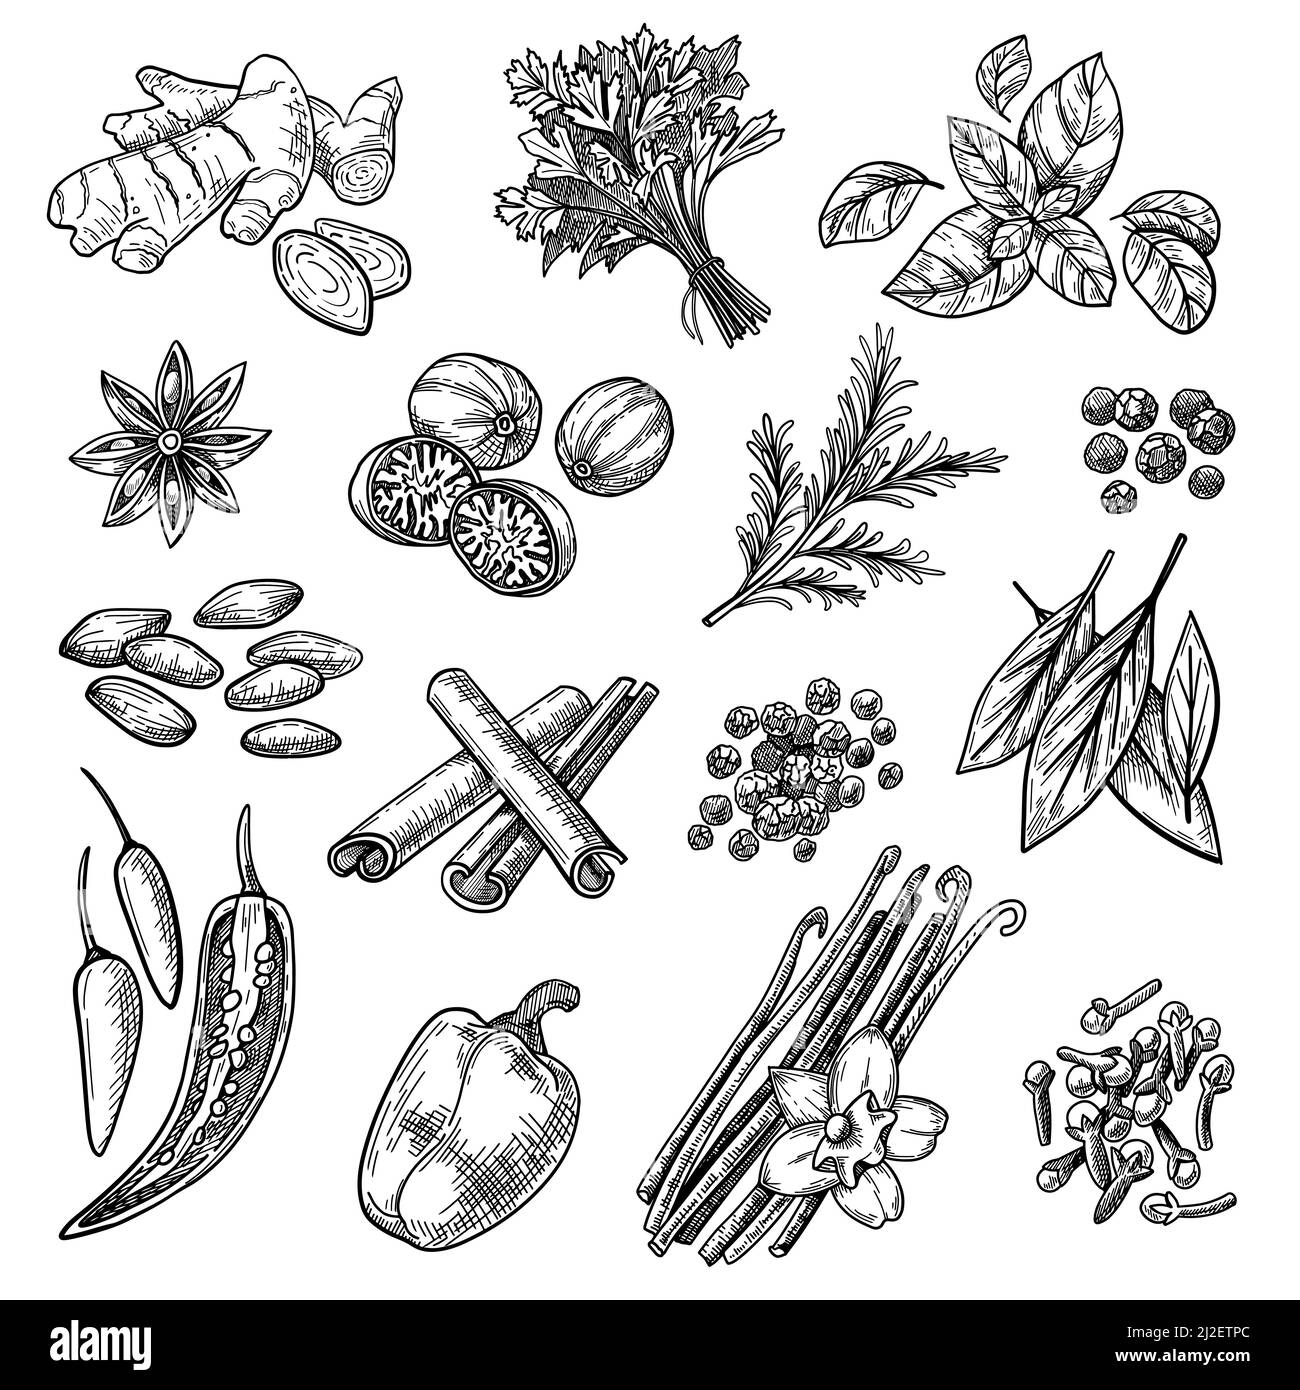 Spices sketches set. Hand drawn cinnamon, cardamom, nutmeg, ginger, clove, vanilla, basil, oregano, rosemary, pepper. Engraved vector illustration for Stock Vector